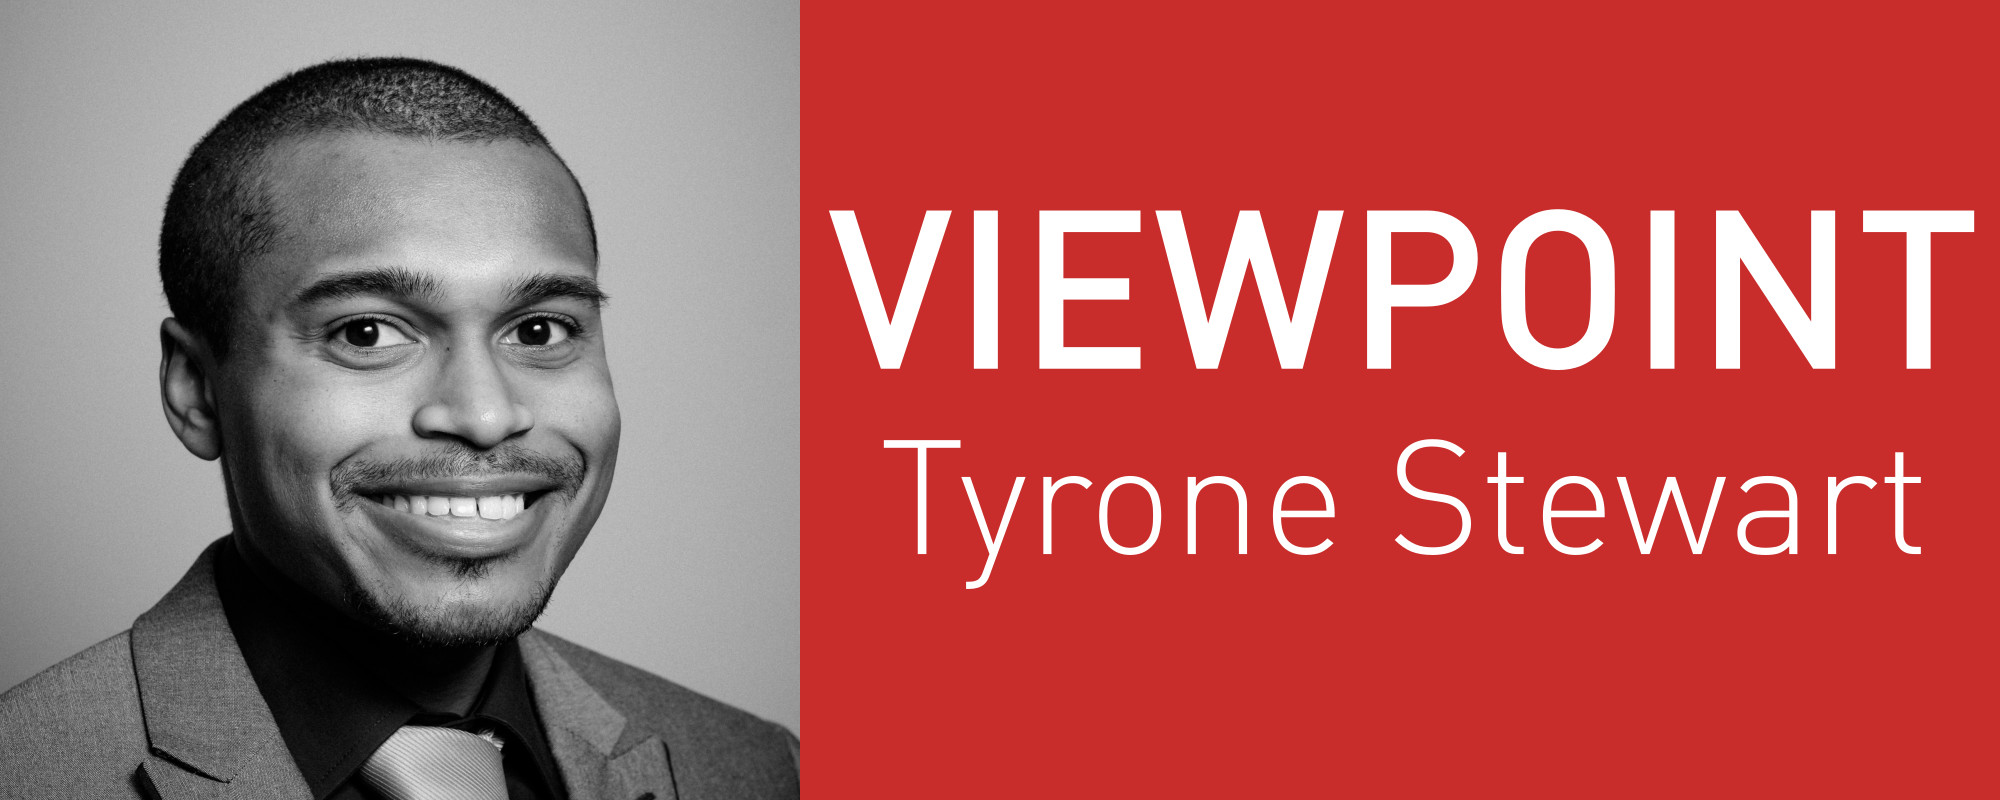 Tyrone Stewart Viewpoint